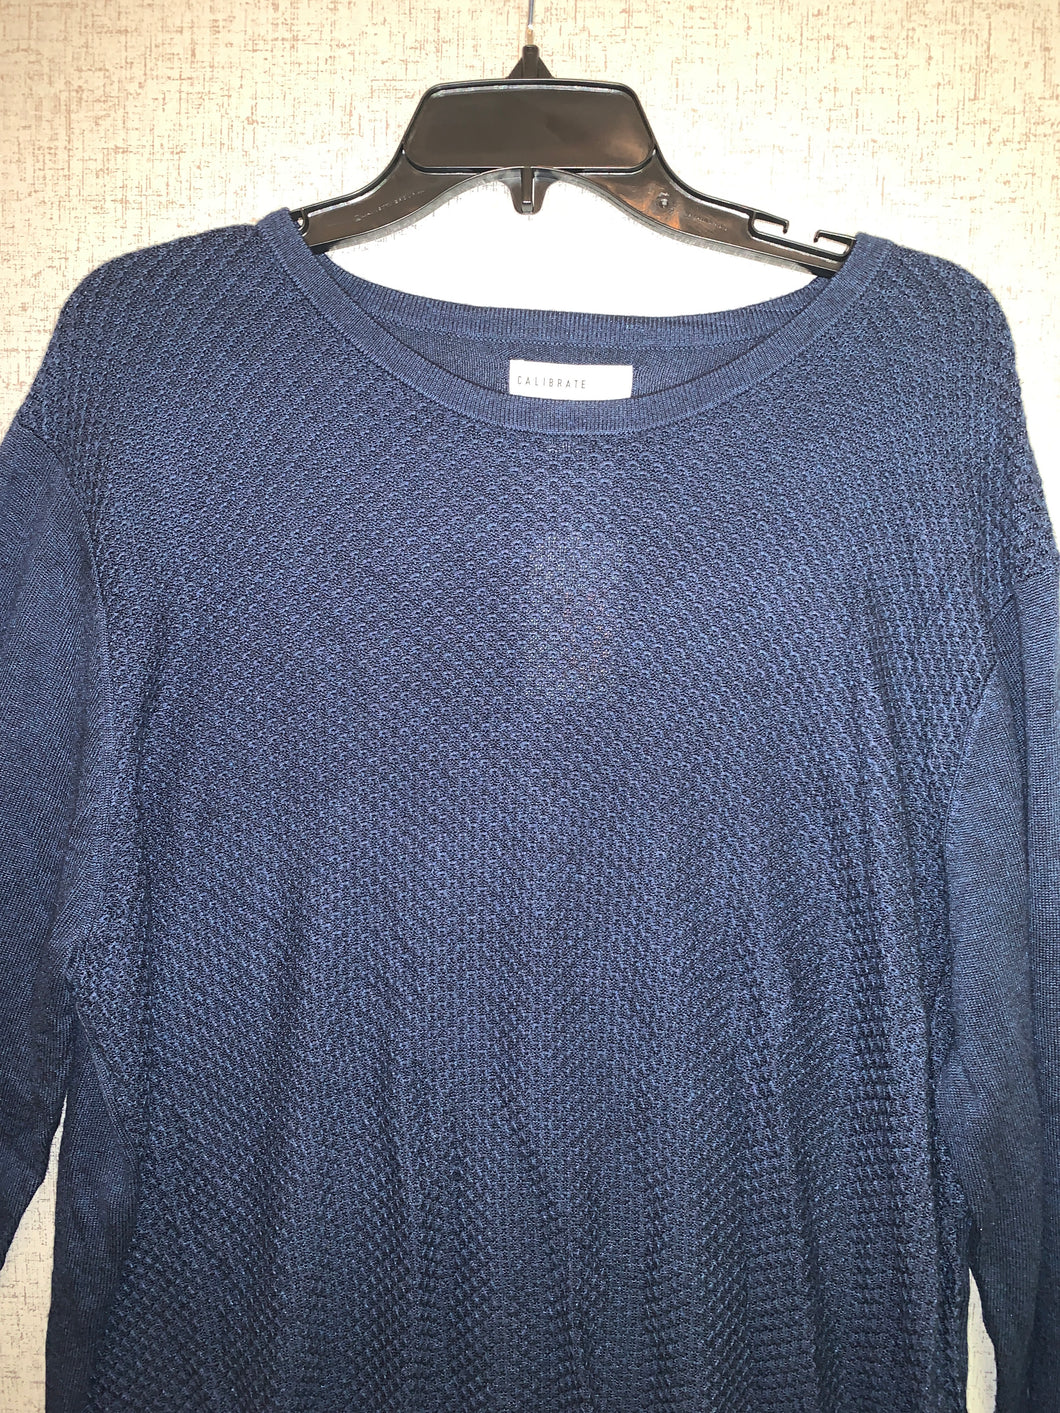 New - Men's Calibrate Long Sleeve Blue Sweater - XL